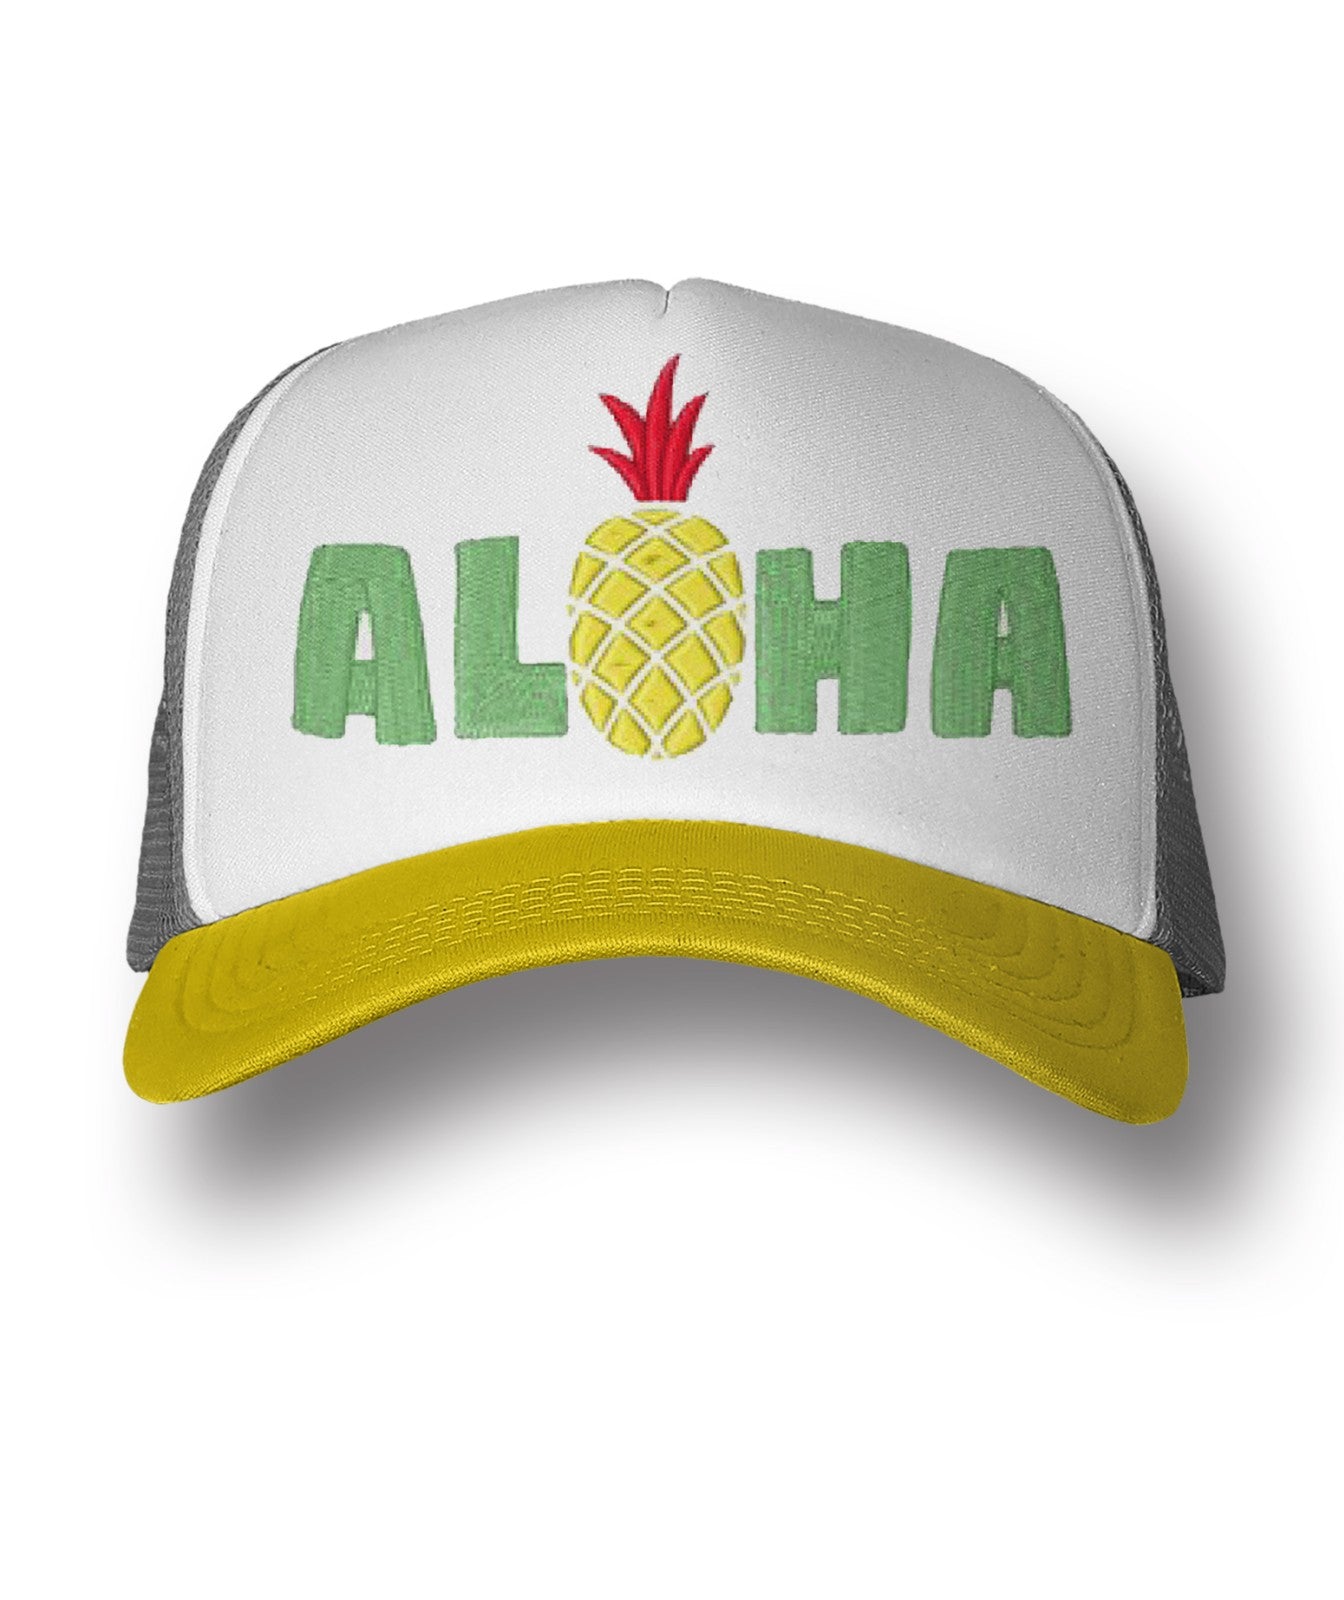 Aloha Trucker Cap mit Ananas gestickt